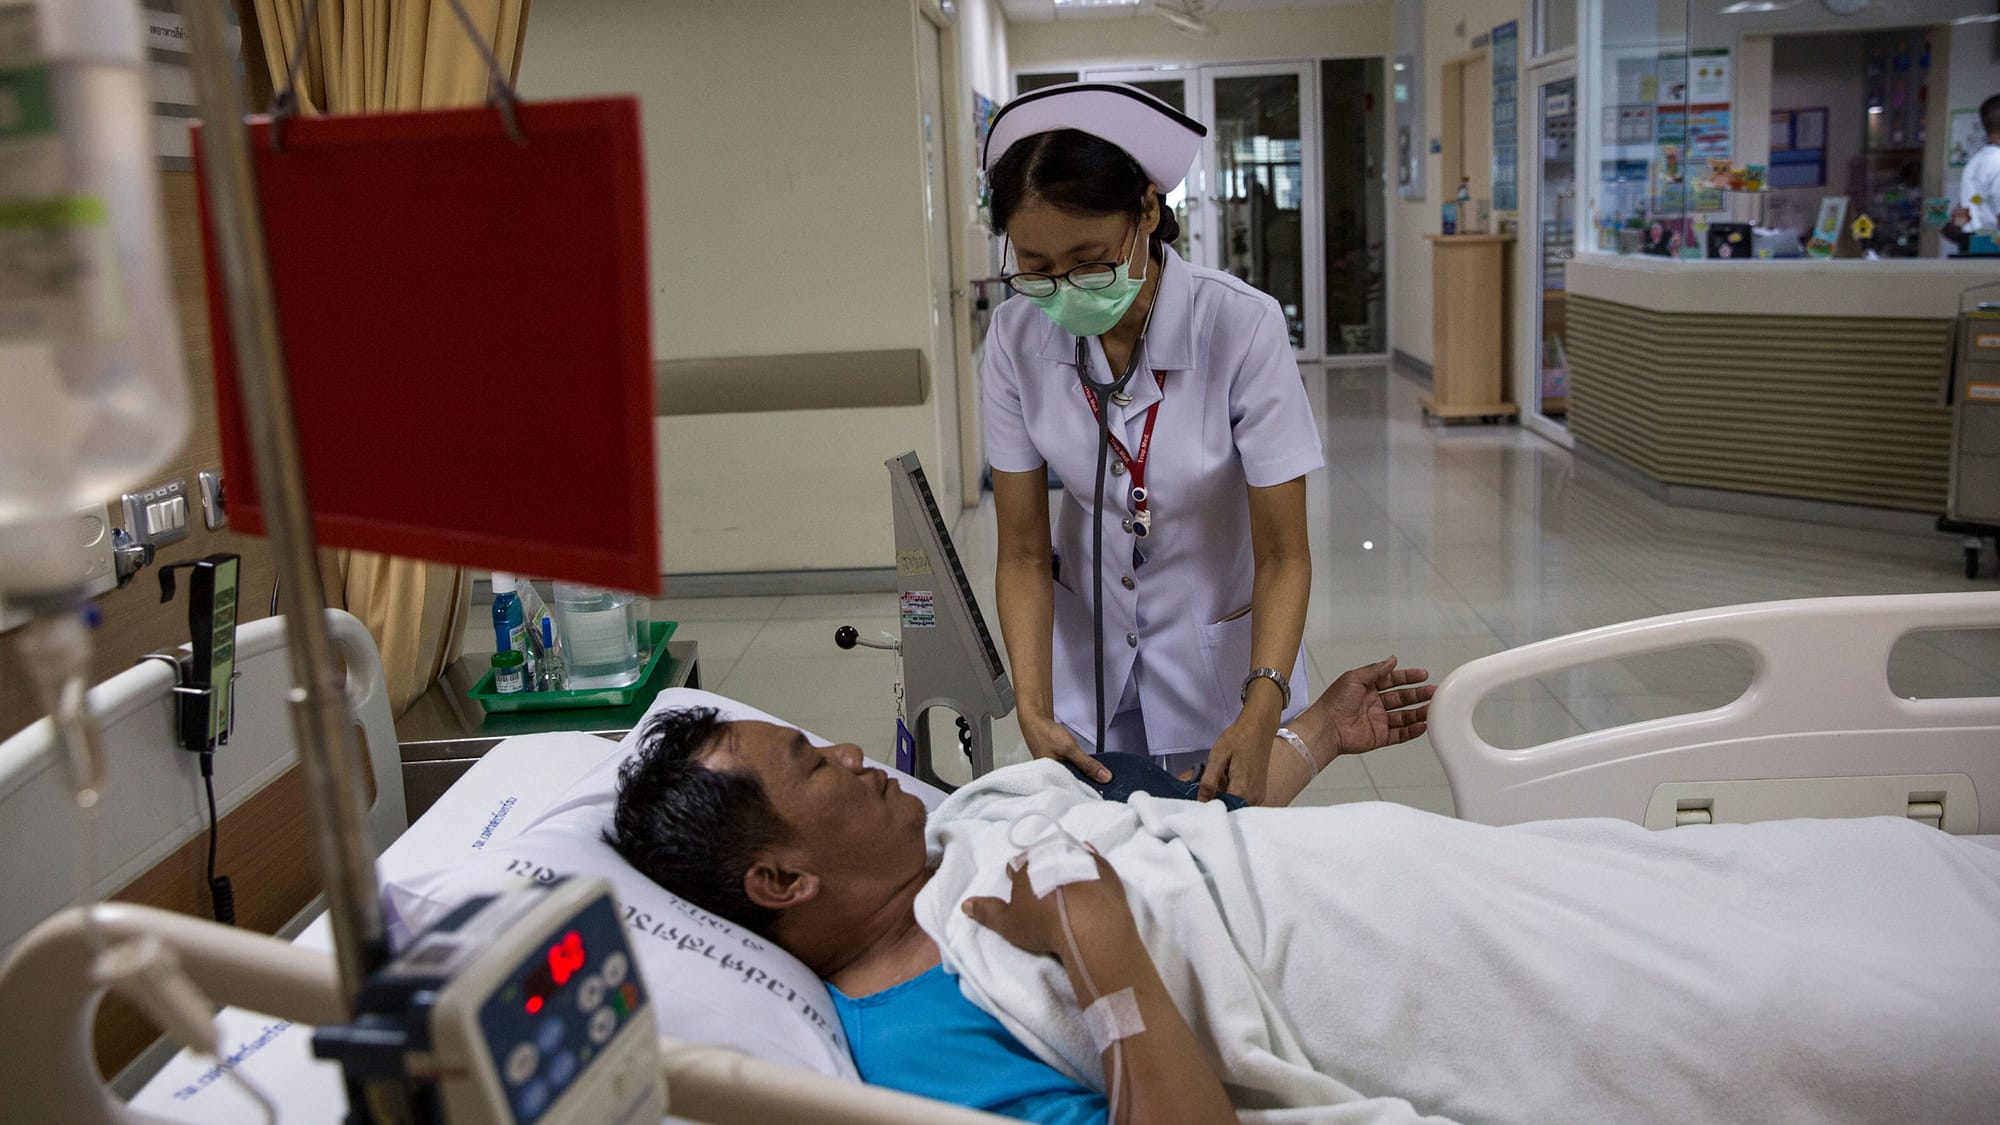 Healthcare worker tending patient in hospital setting